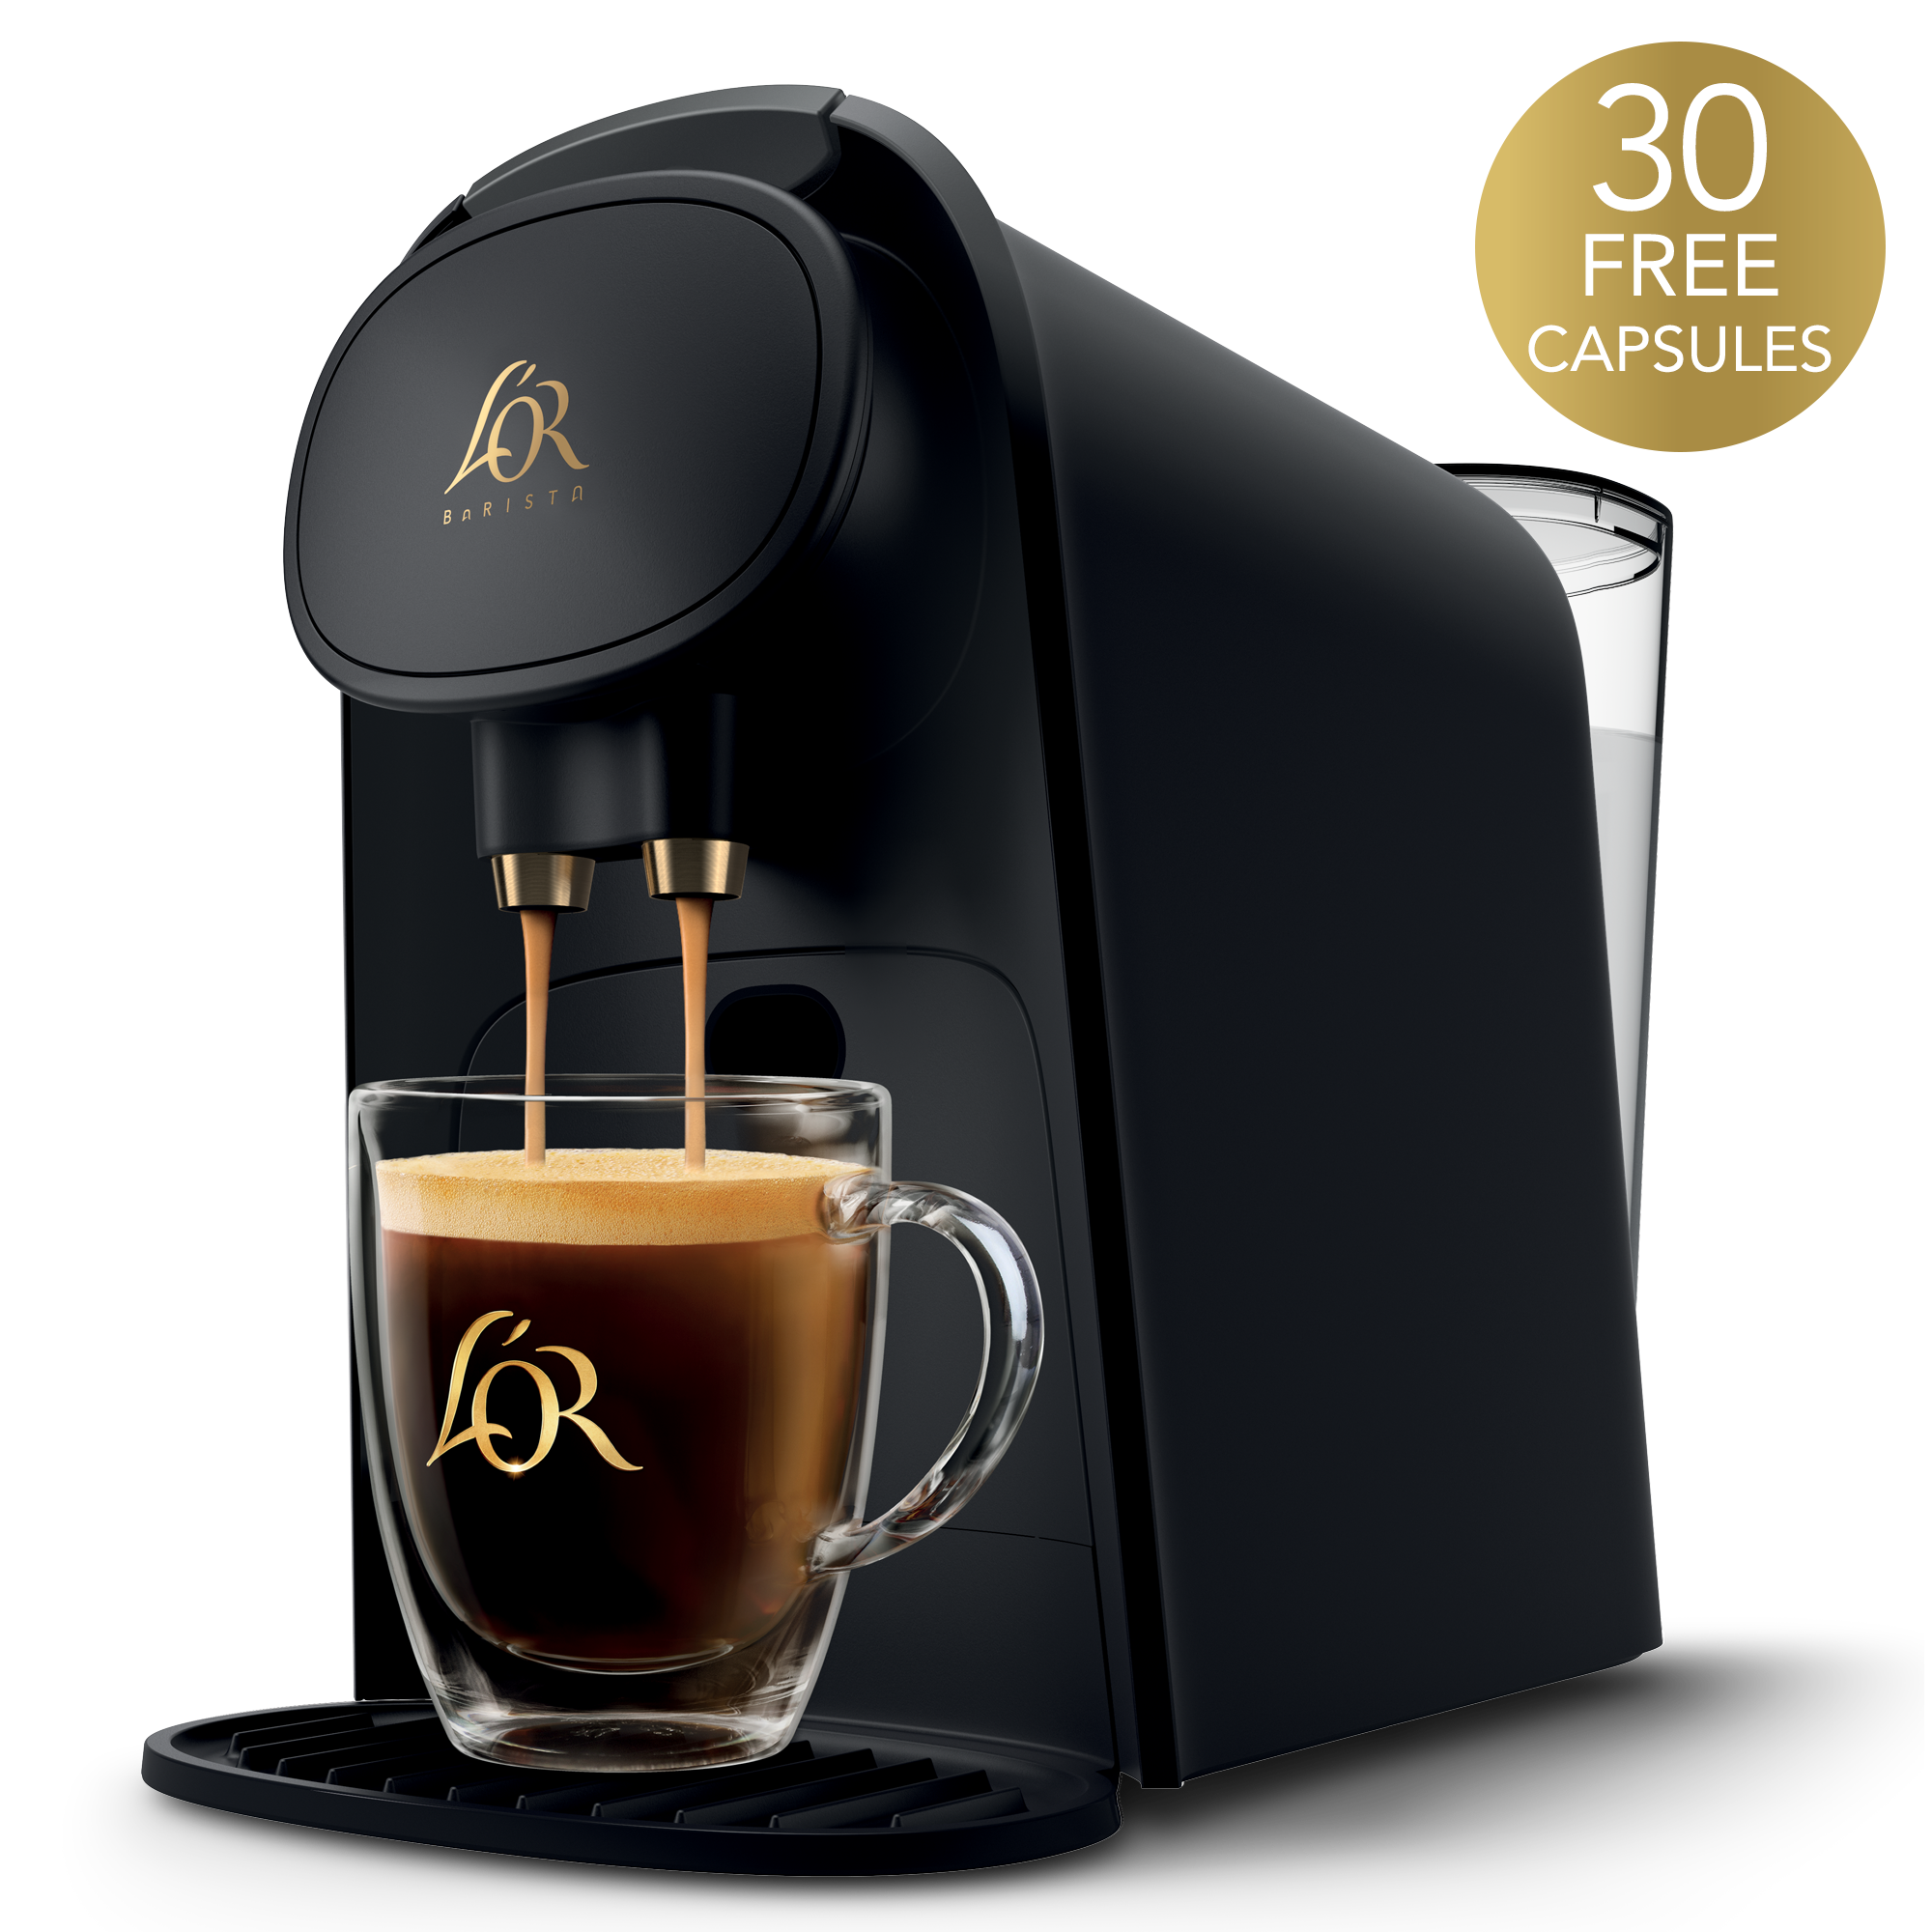 Image of L'OR BARISTA Coffee & Espresso System